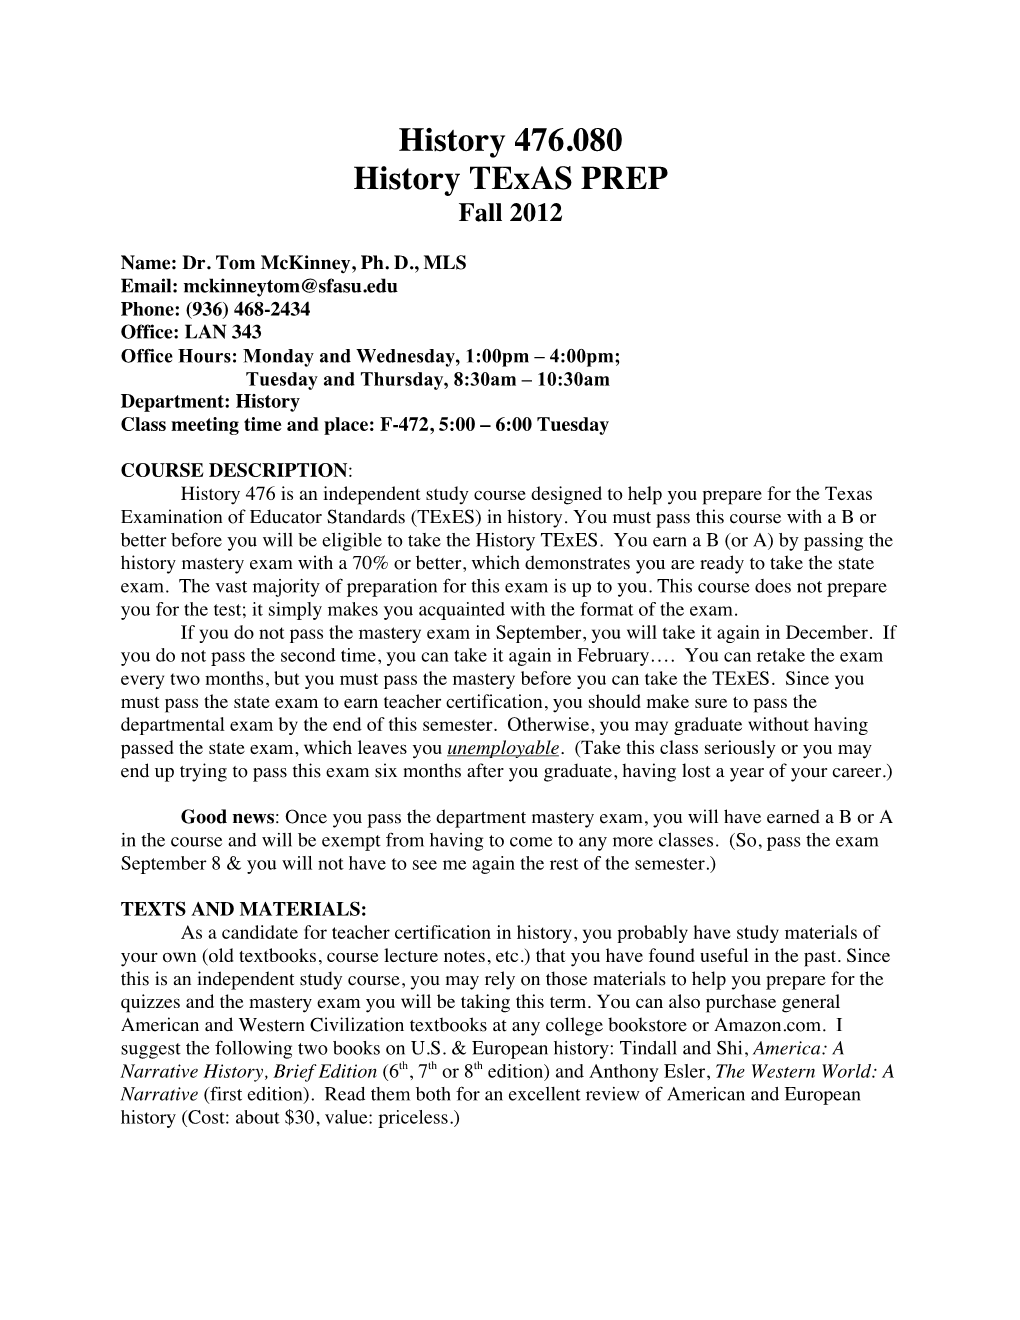 History 476.080 History Texas PREP Fall 2012